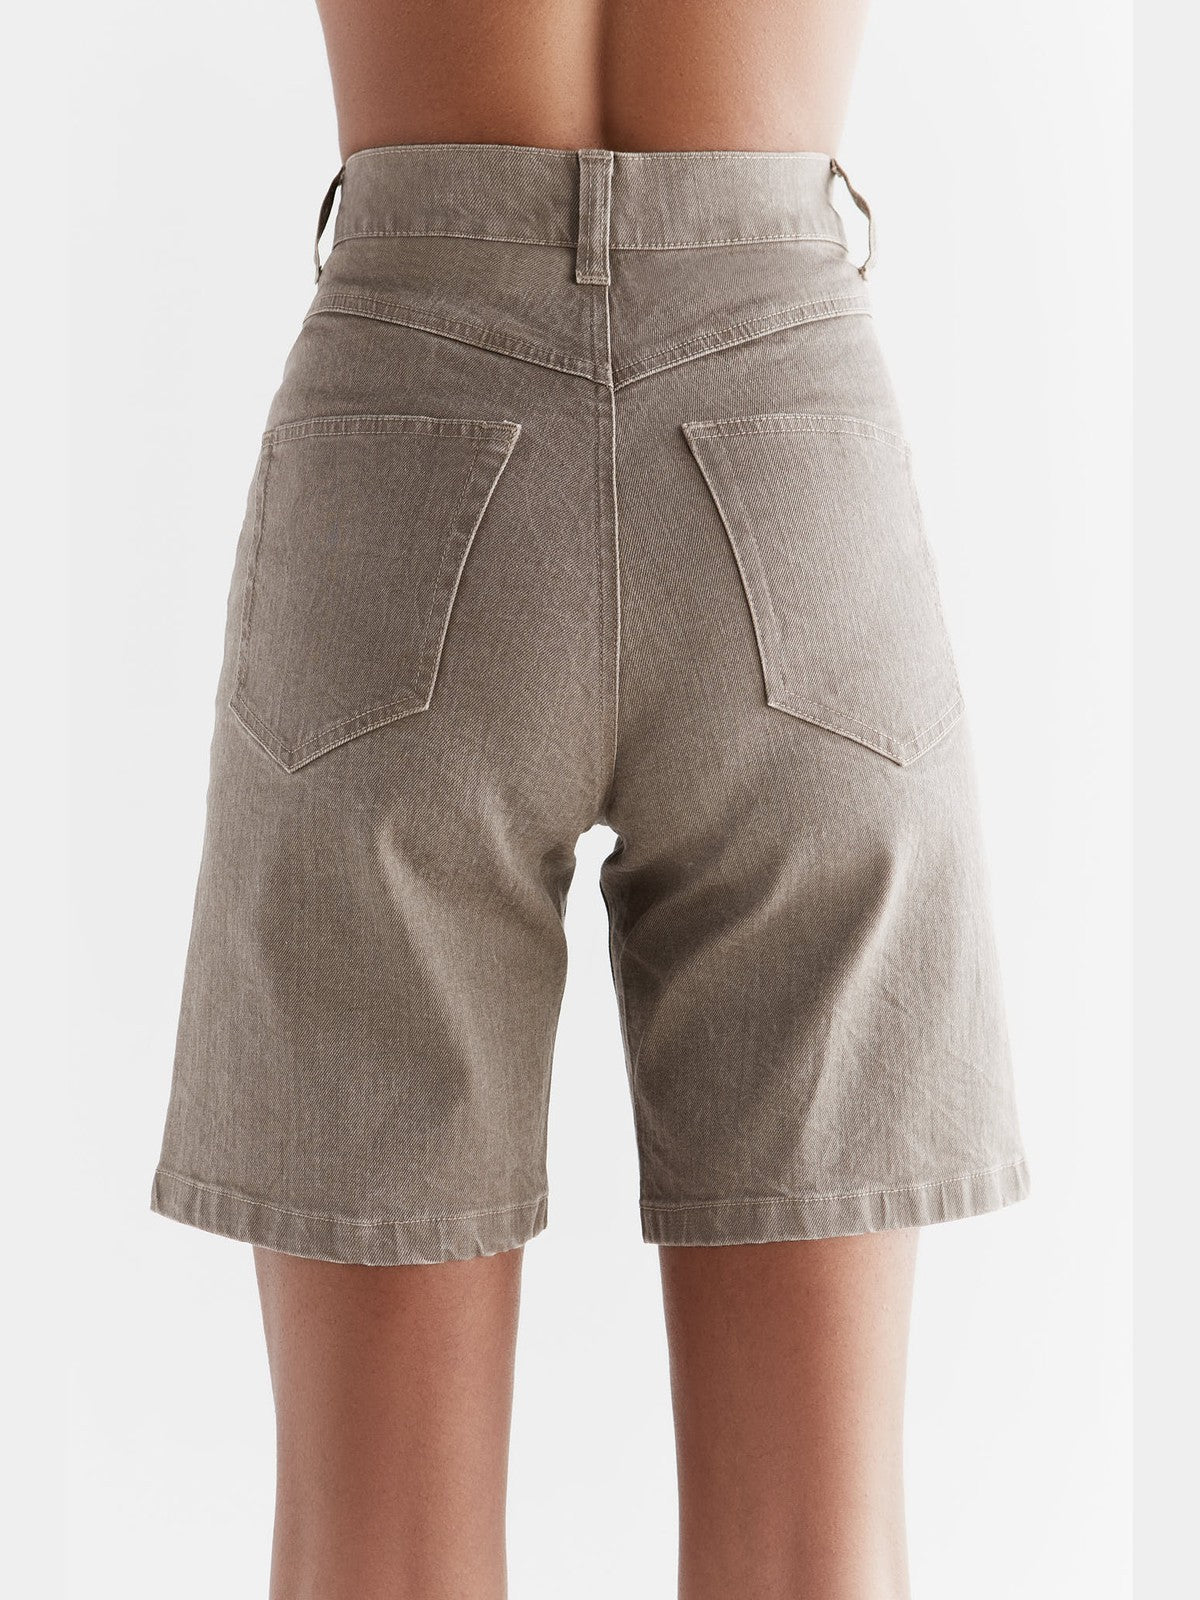 WA3018-395 | Women Denim Shorts in Ton Waschung - Pebble